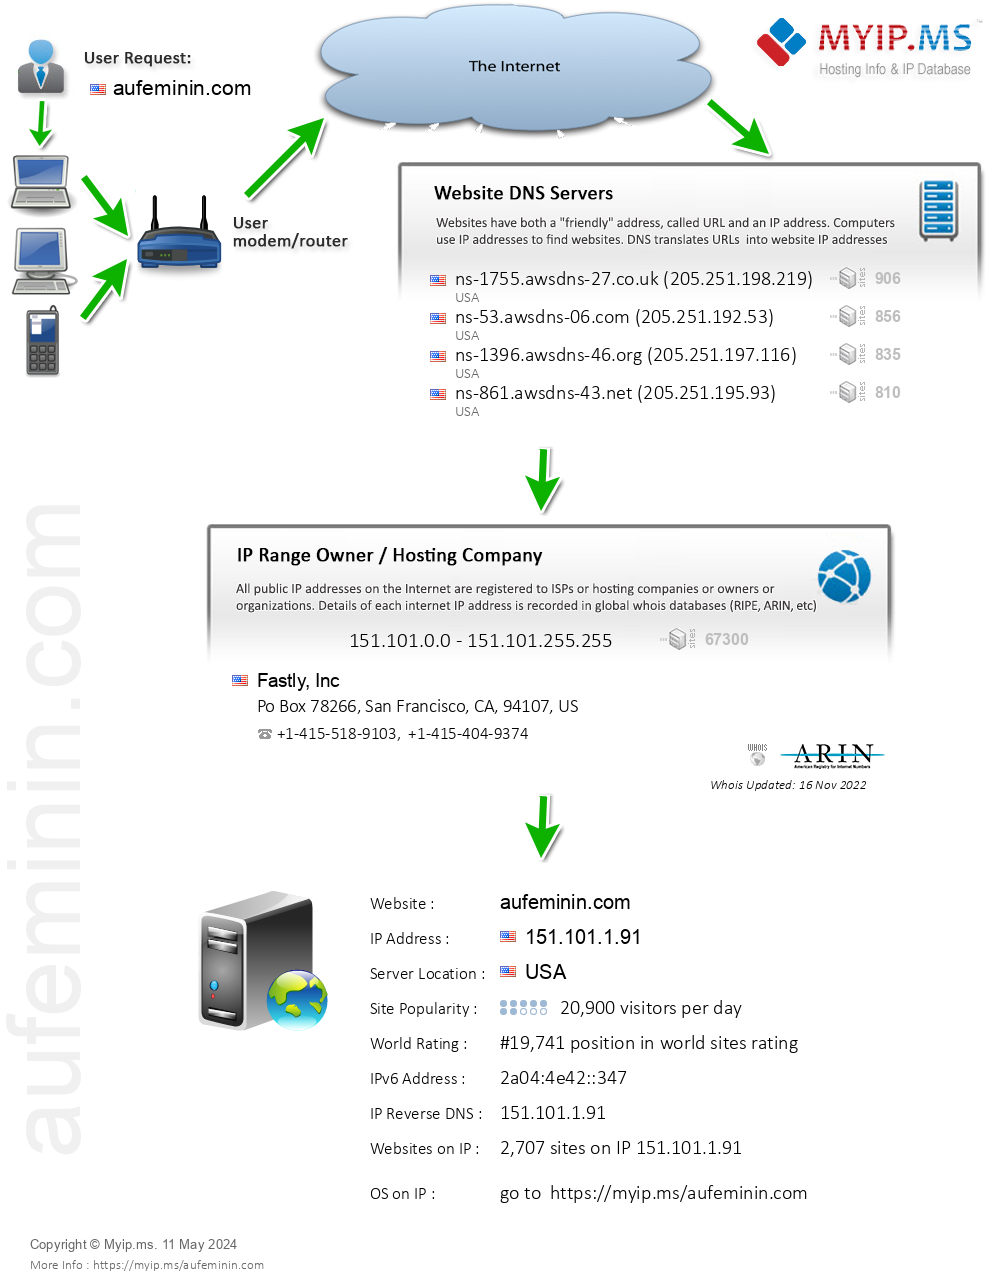 Aufeminin.com - Website Hosting Visual IP Diagram